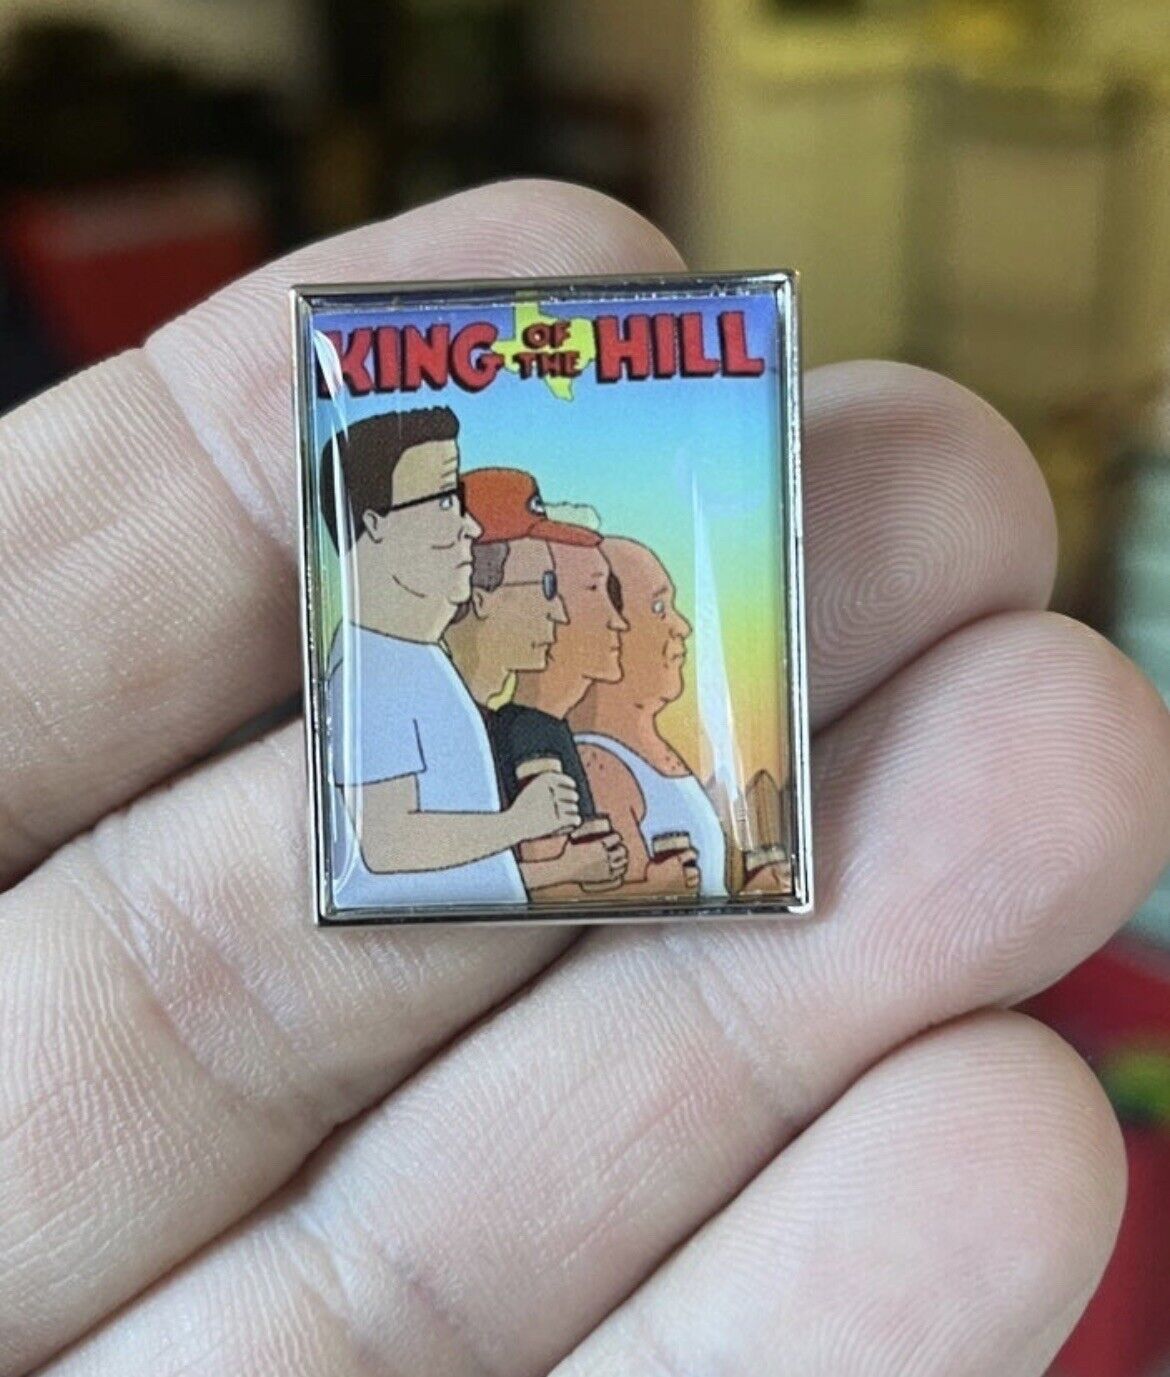 King of The Hill enamel pin Texas Mike Judge Cartoon Retro TV 90s Comedy Satire